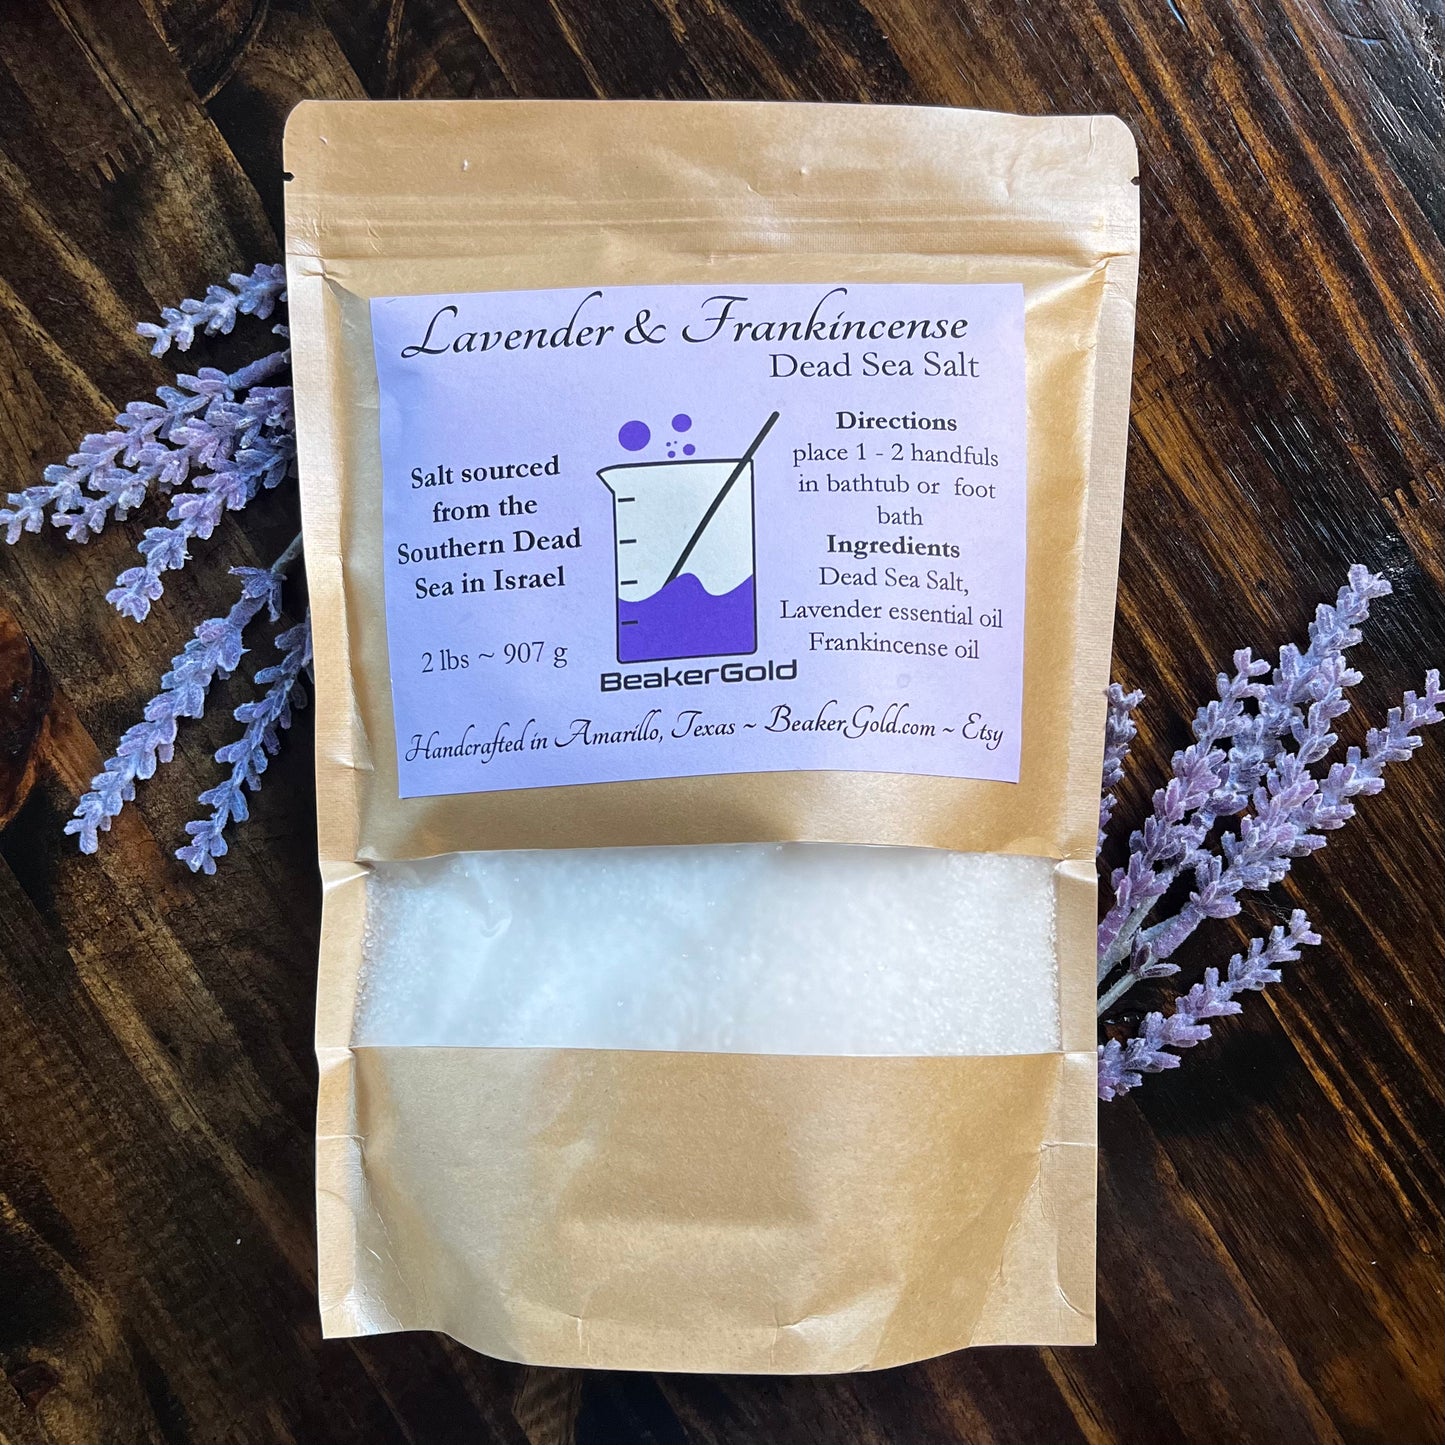 Lavender & Frankincense Dead Sea Salt